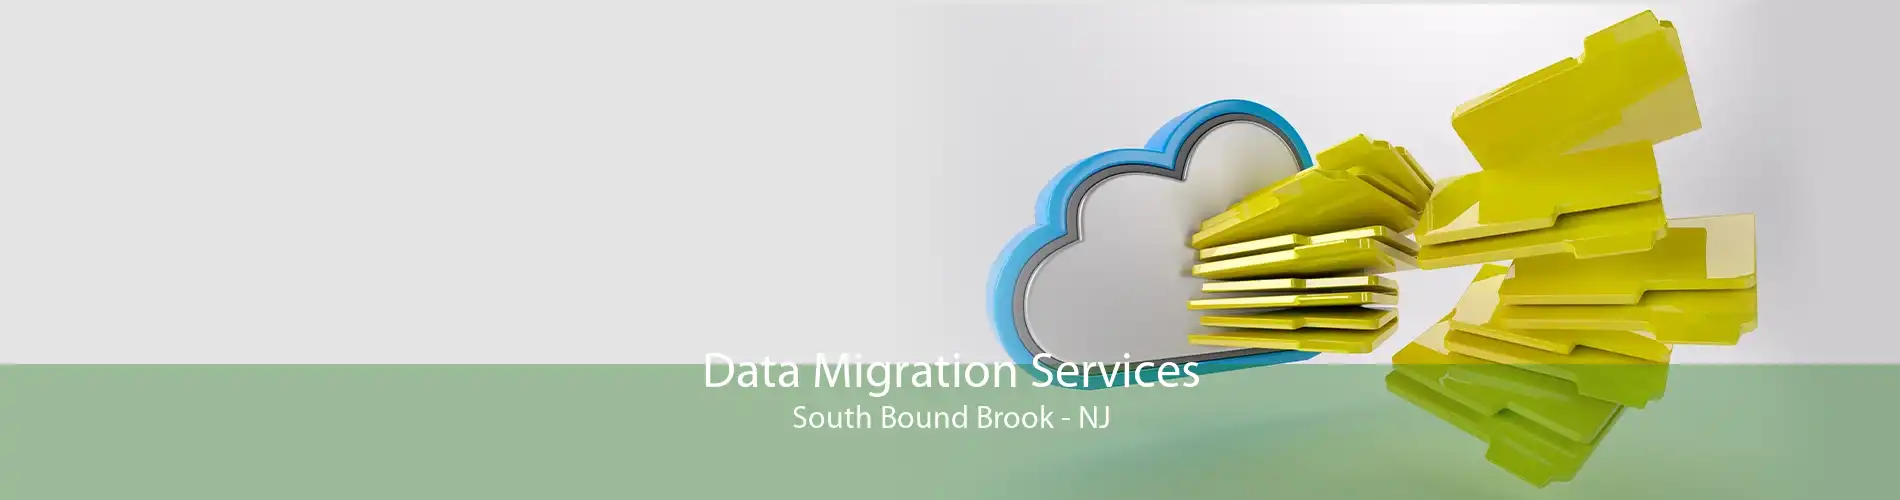 Data Migration Services South Bound Brook - NJ